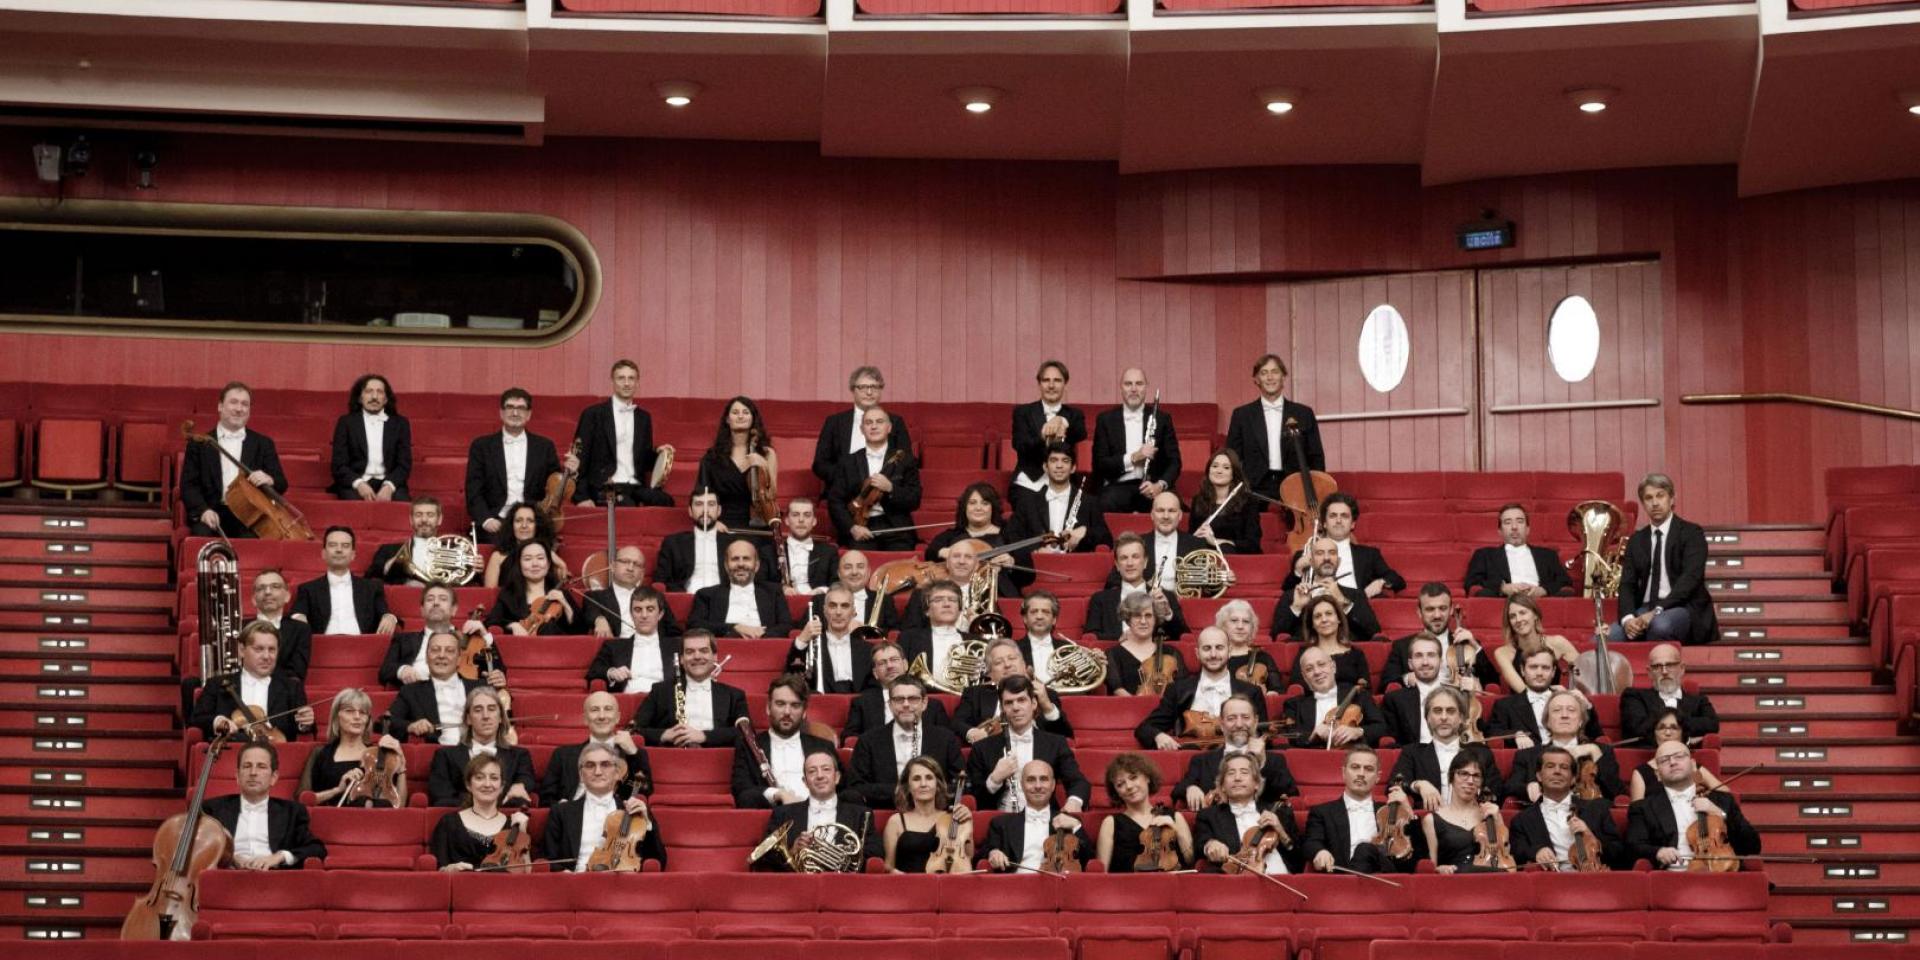 The Orchestra Teatro Regio Torino